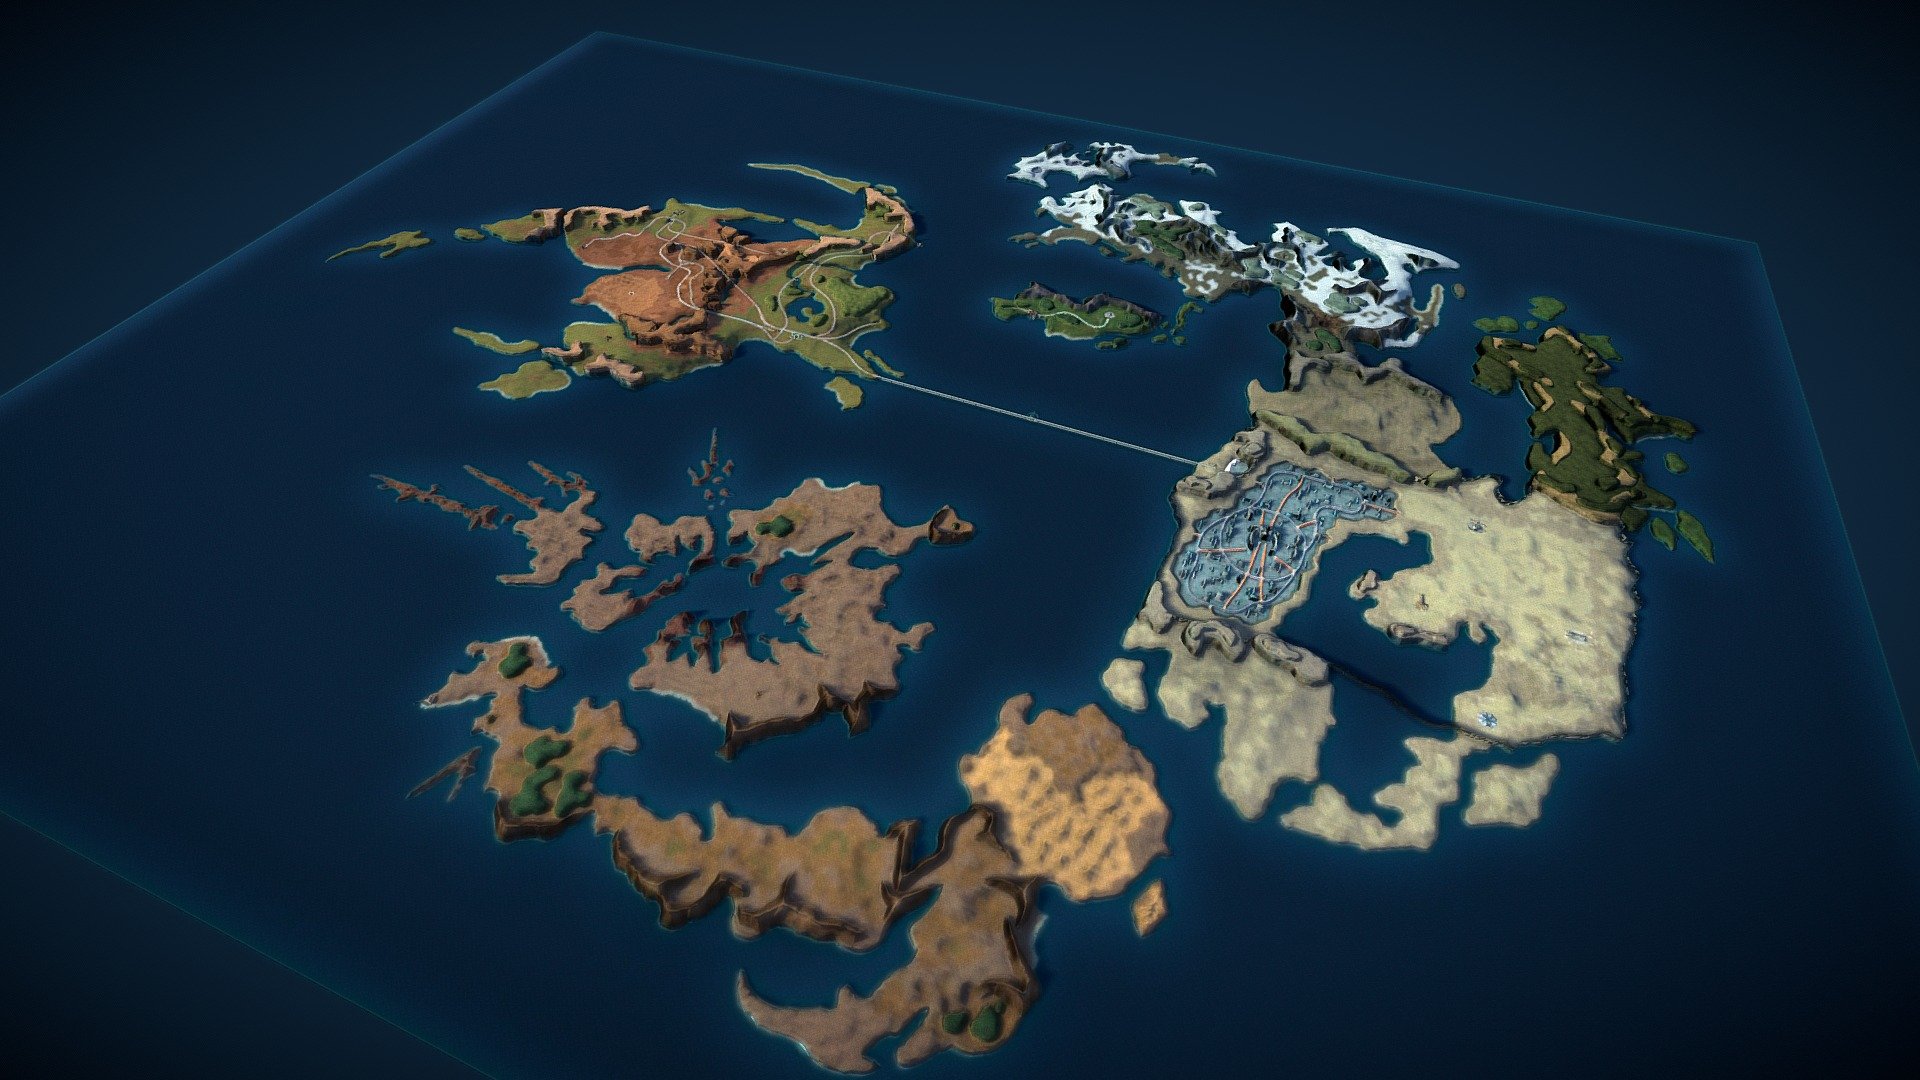 Final Fantasy VIII 3D World Map - 3D model by v7x.